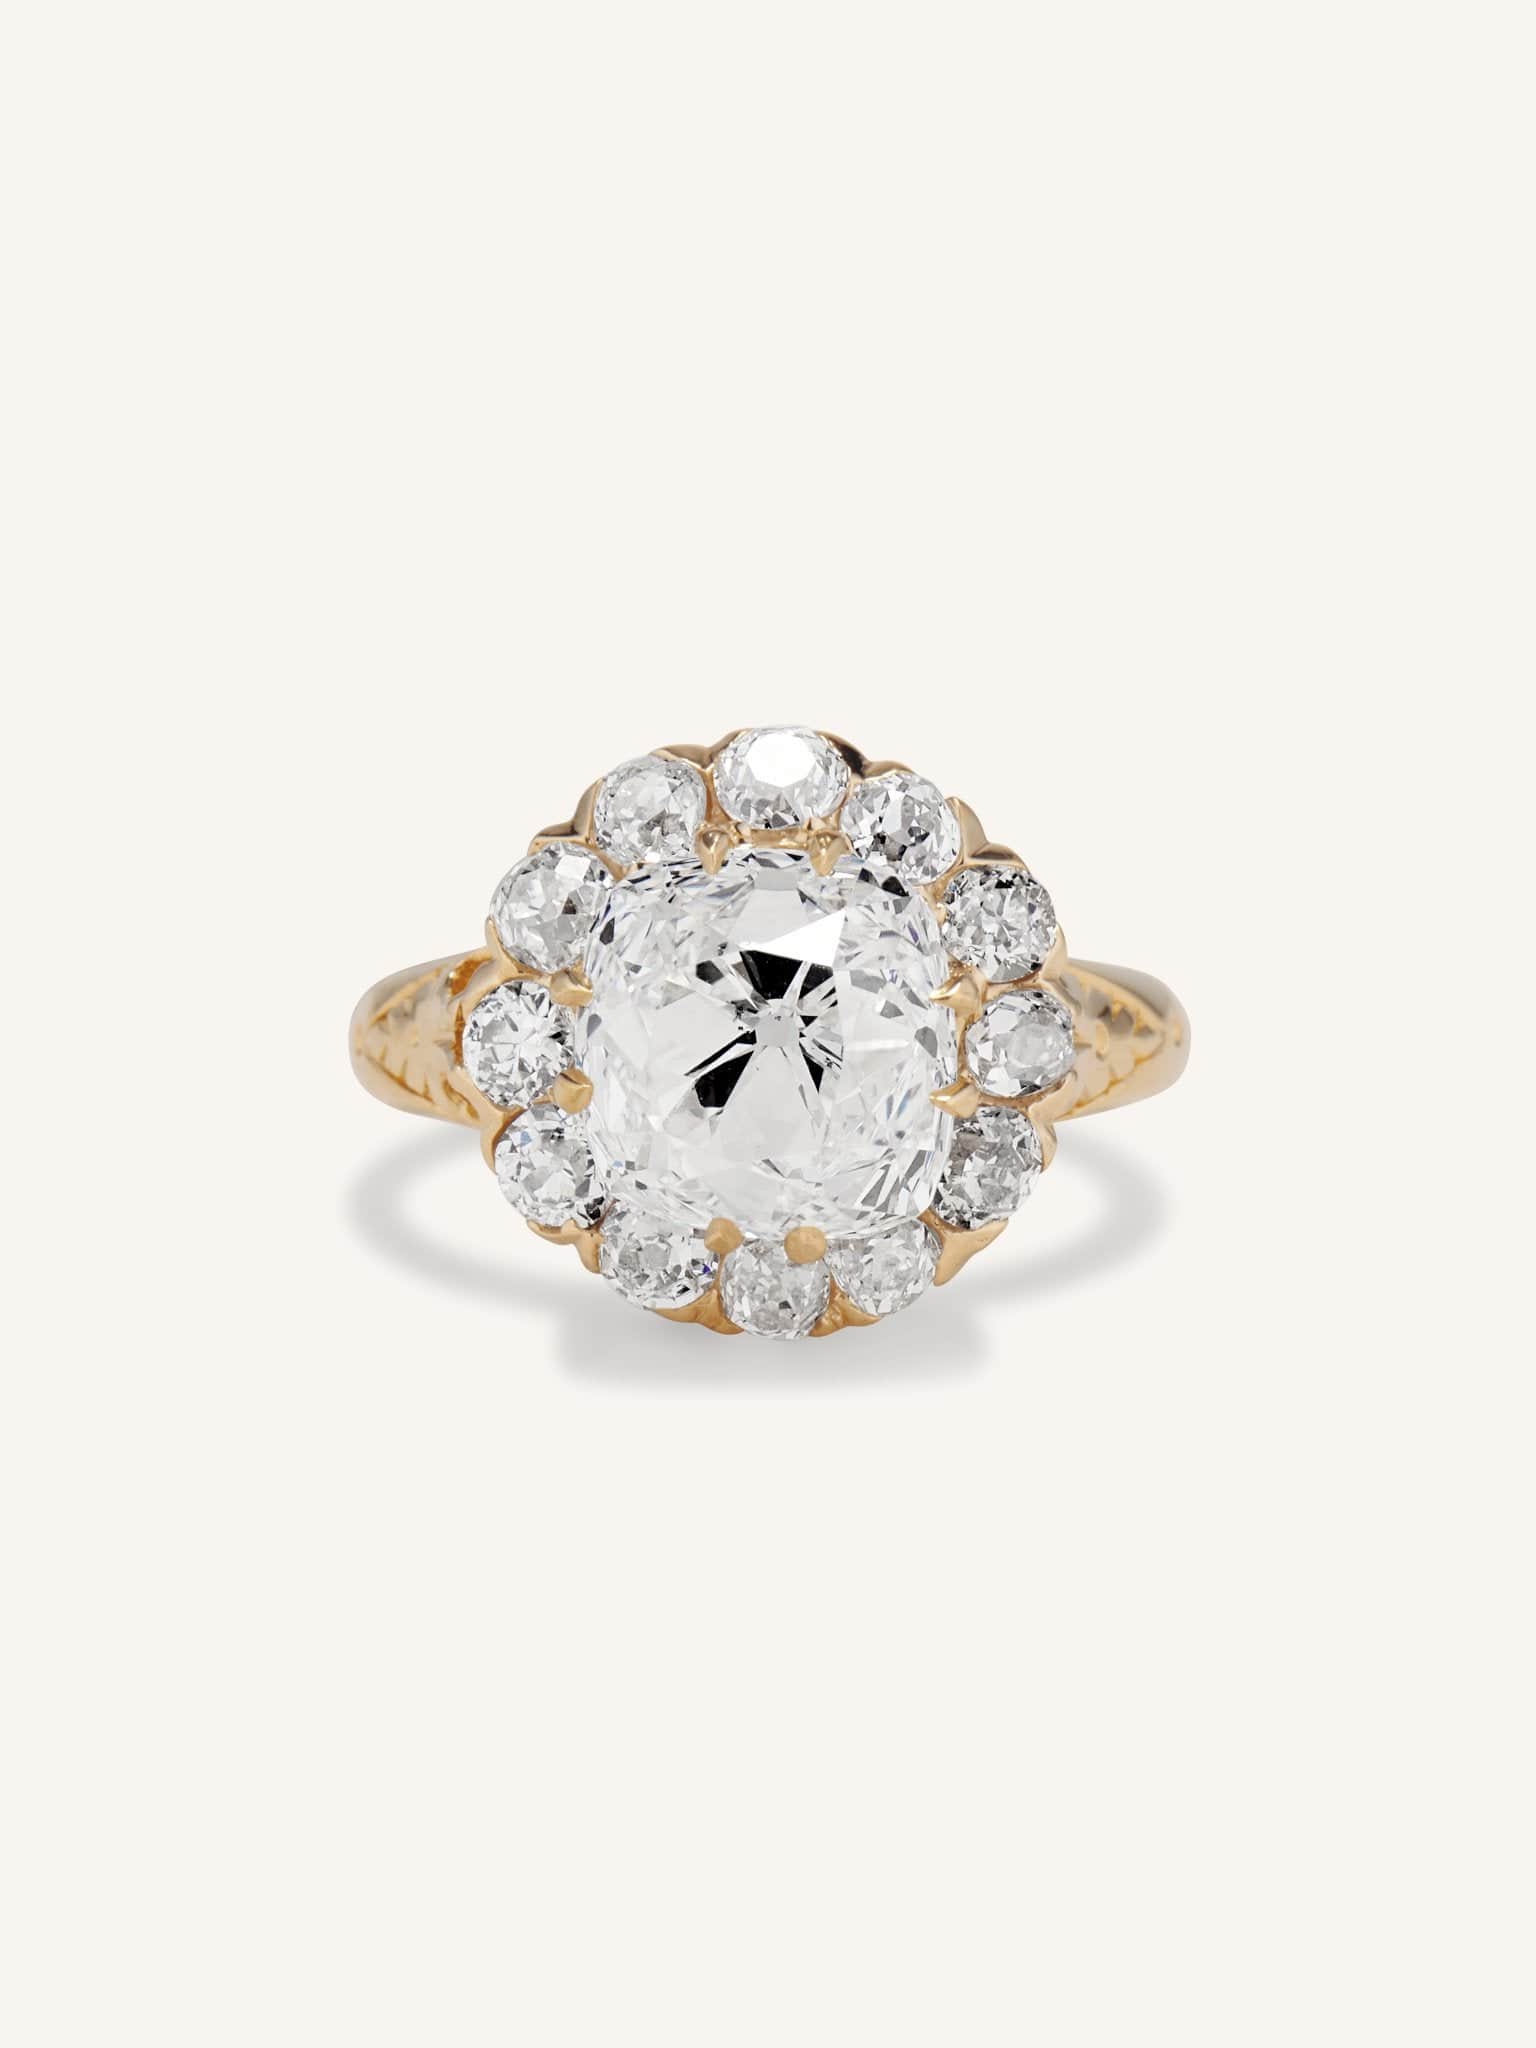 The Top 15 Vintage & Antique Sapphire Engagement Rings